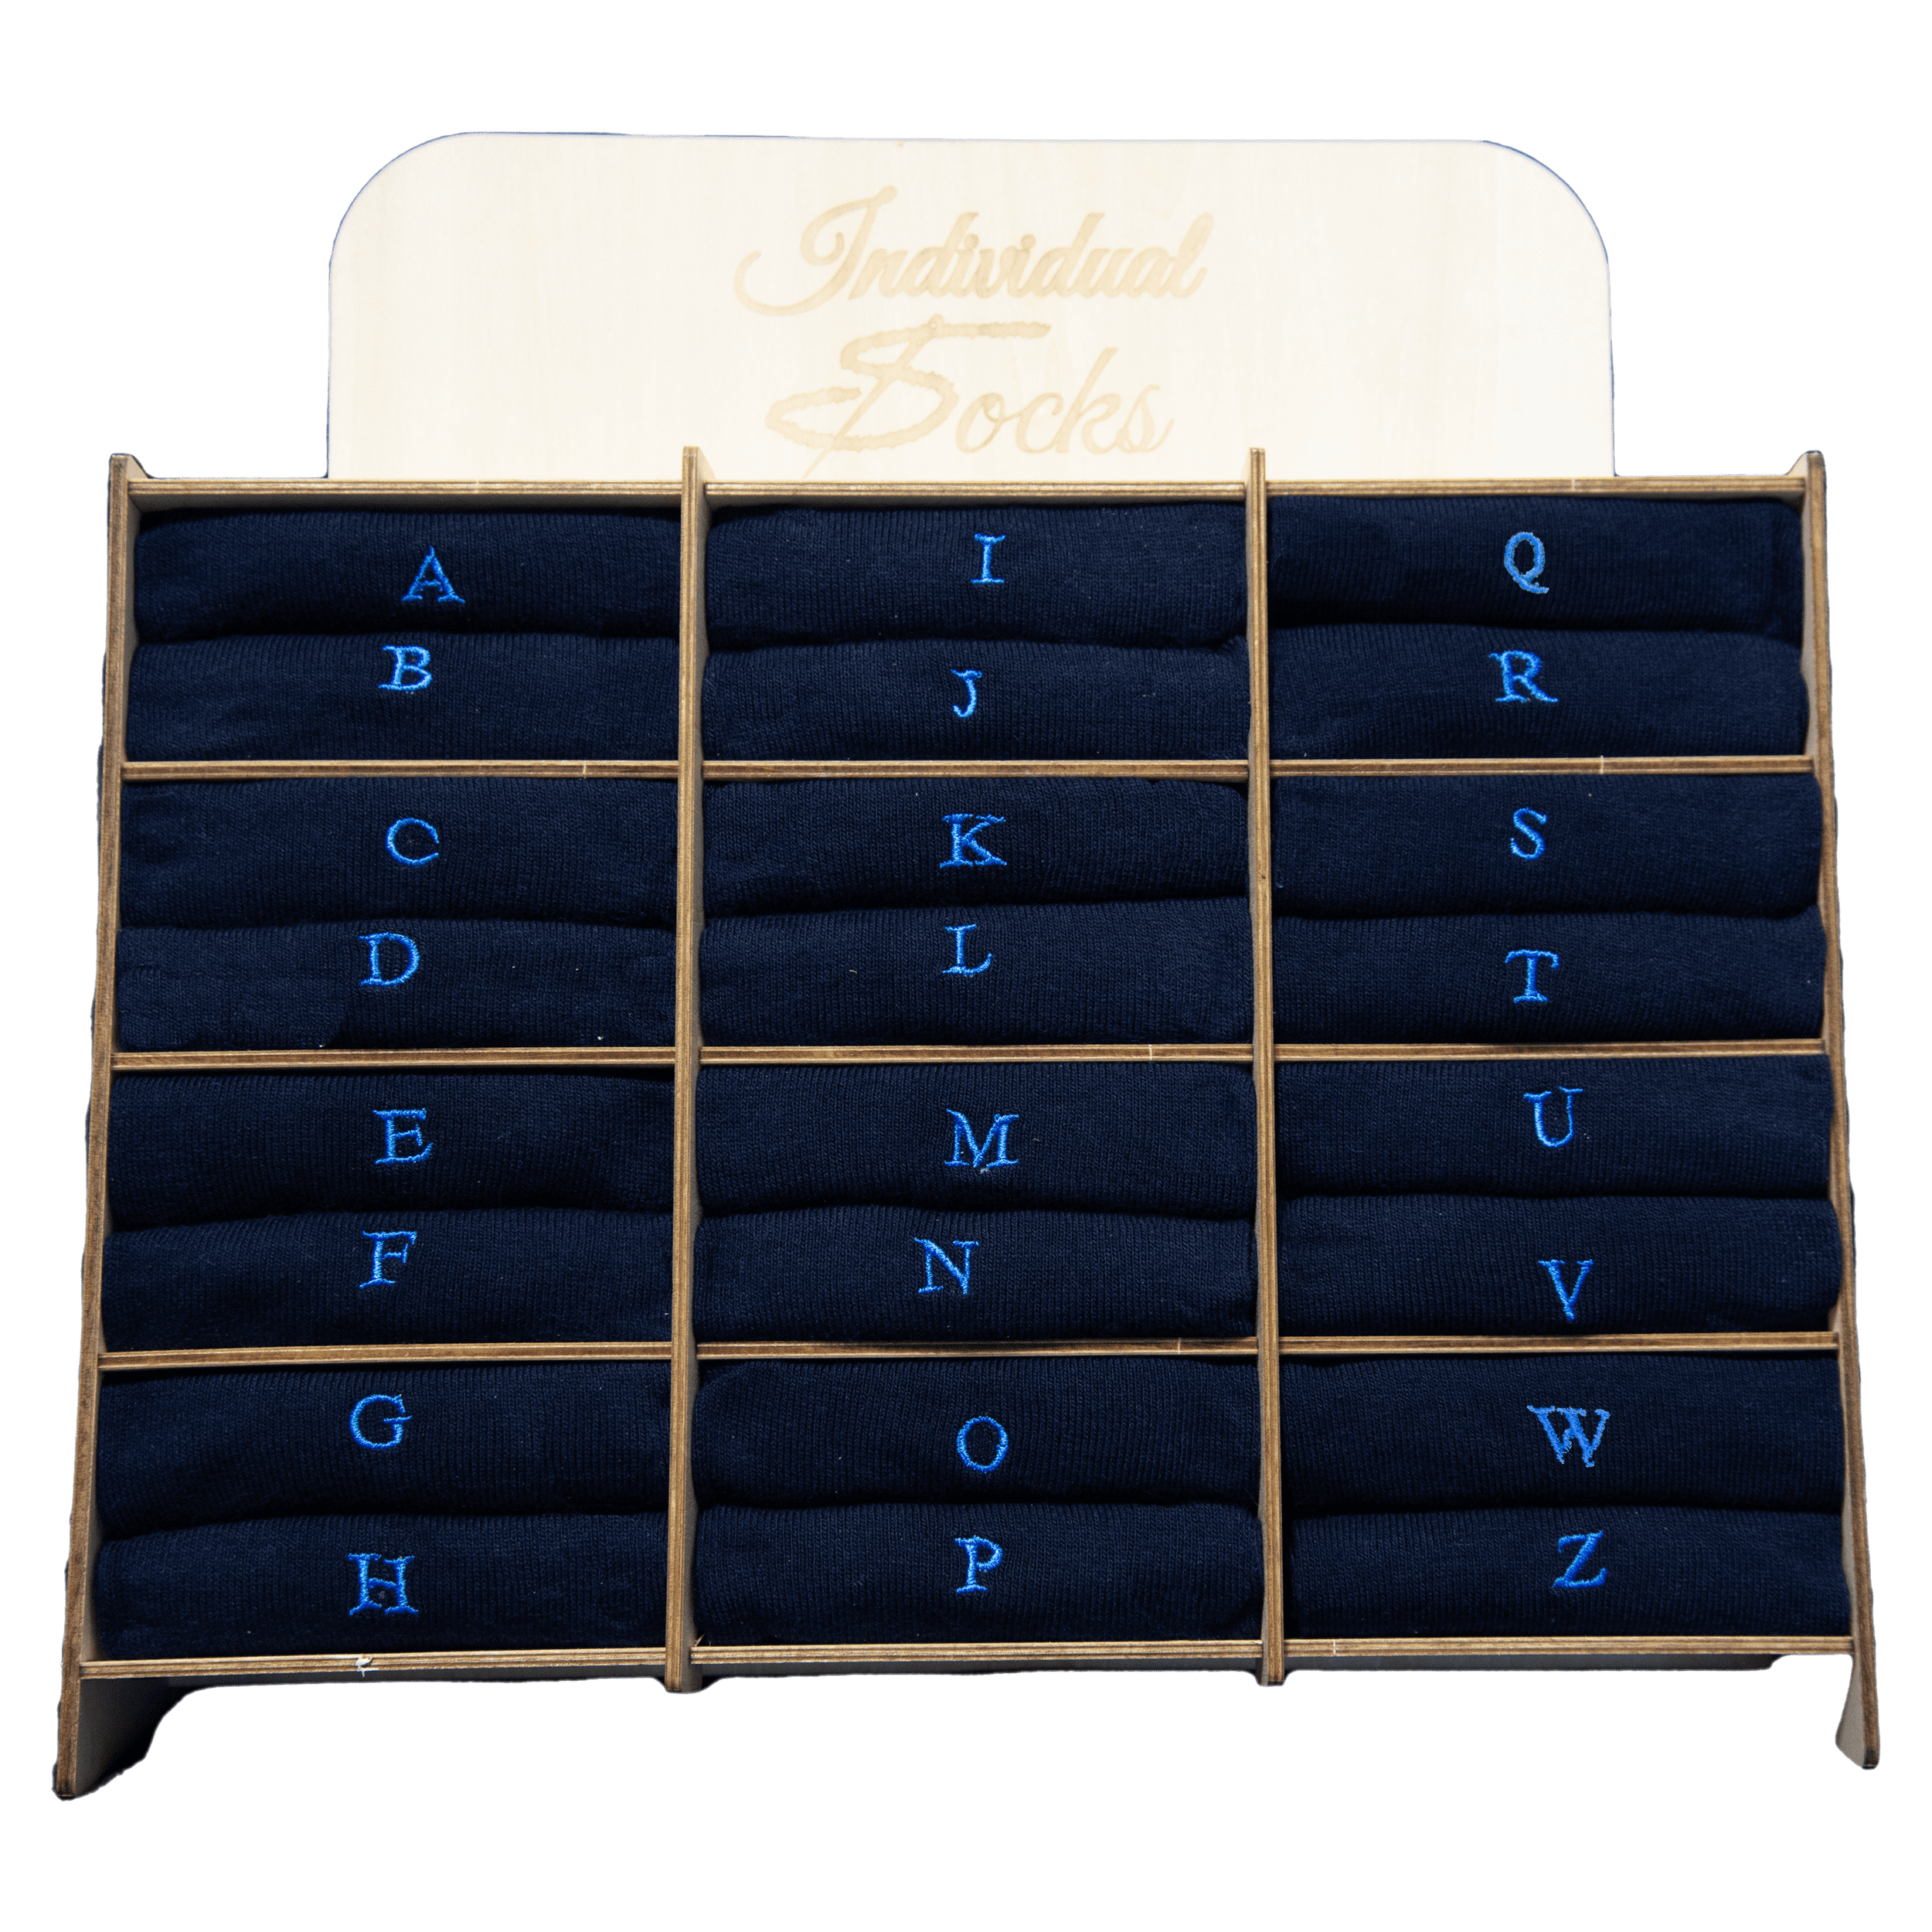 Blue Men's Socks with Royal Initials - Filo di scozia Super light Stretch - Size 40/45 - 153